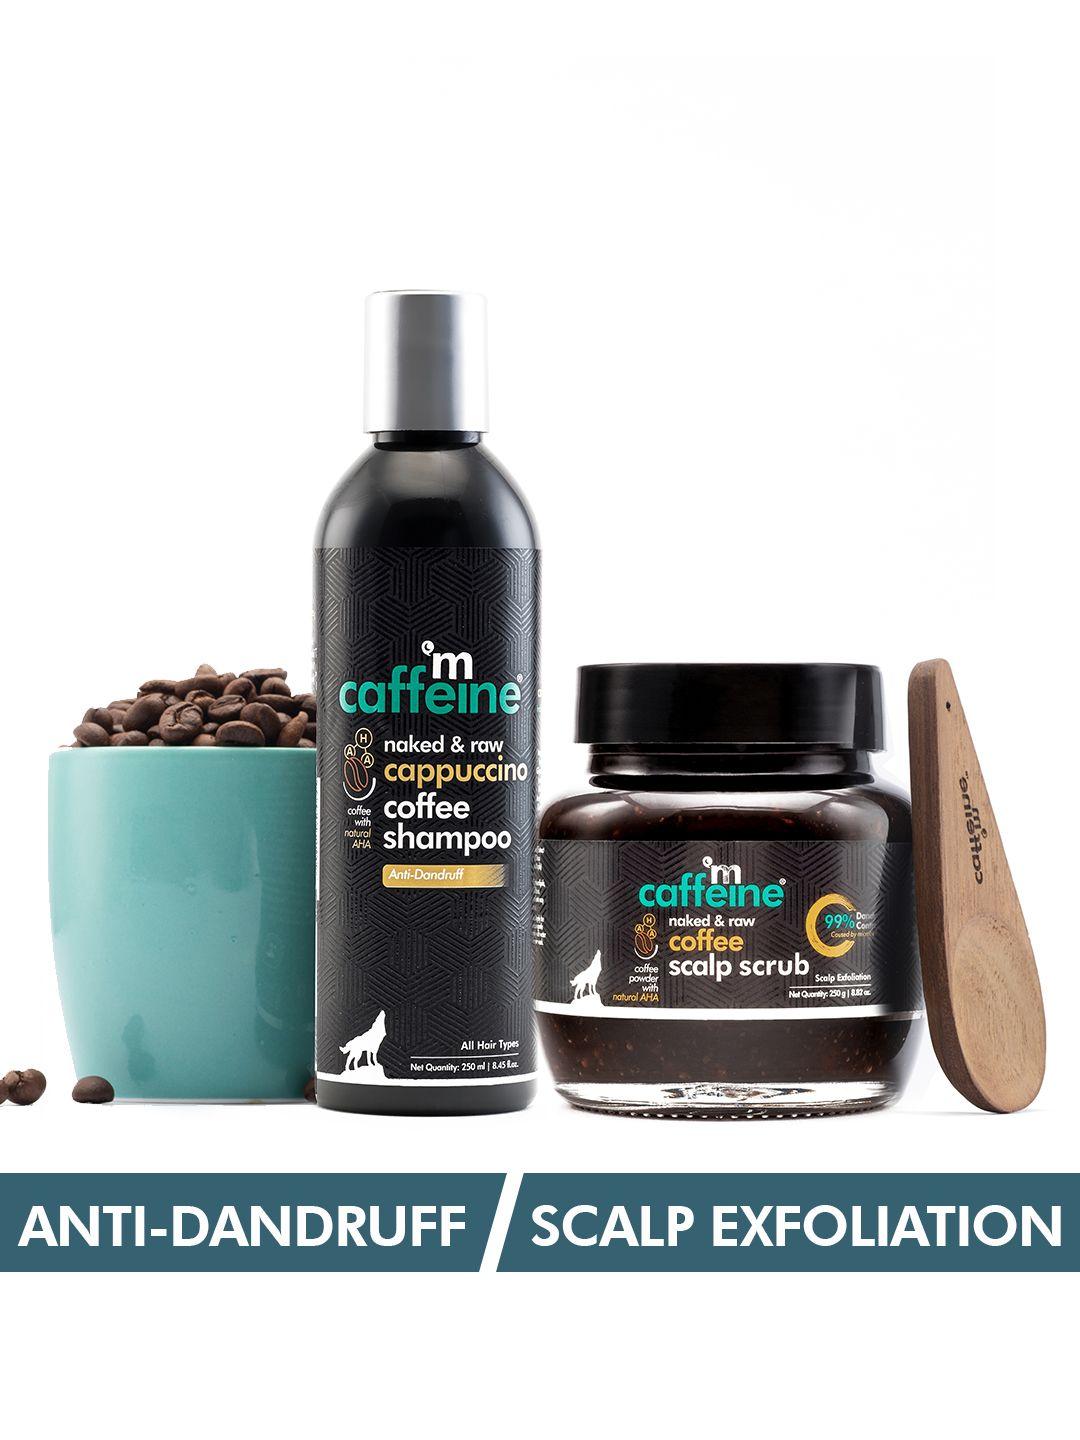 mcaffeine ultimate anti-dandruff kit with coffee scalp scrub and cappuccino shampoo